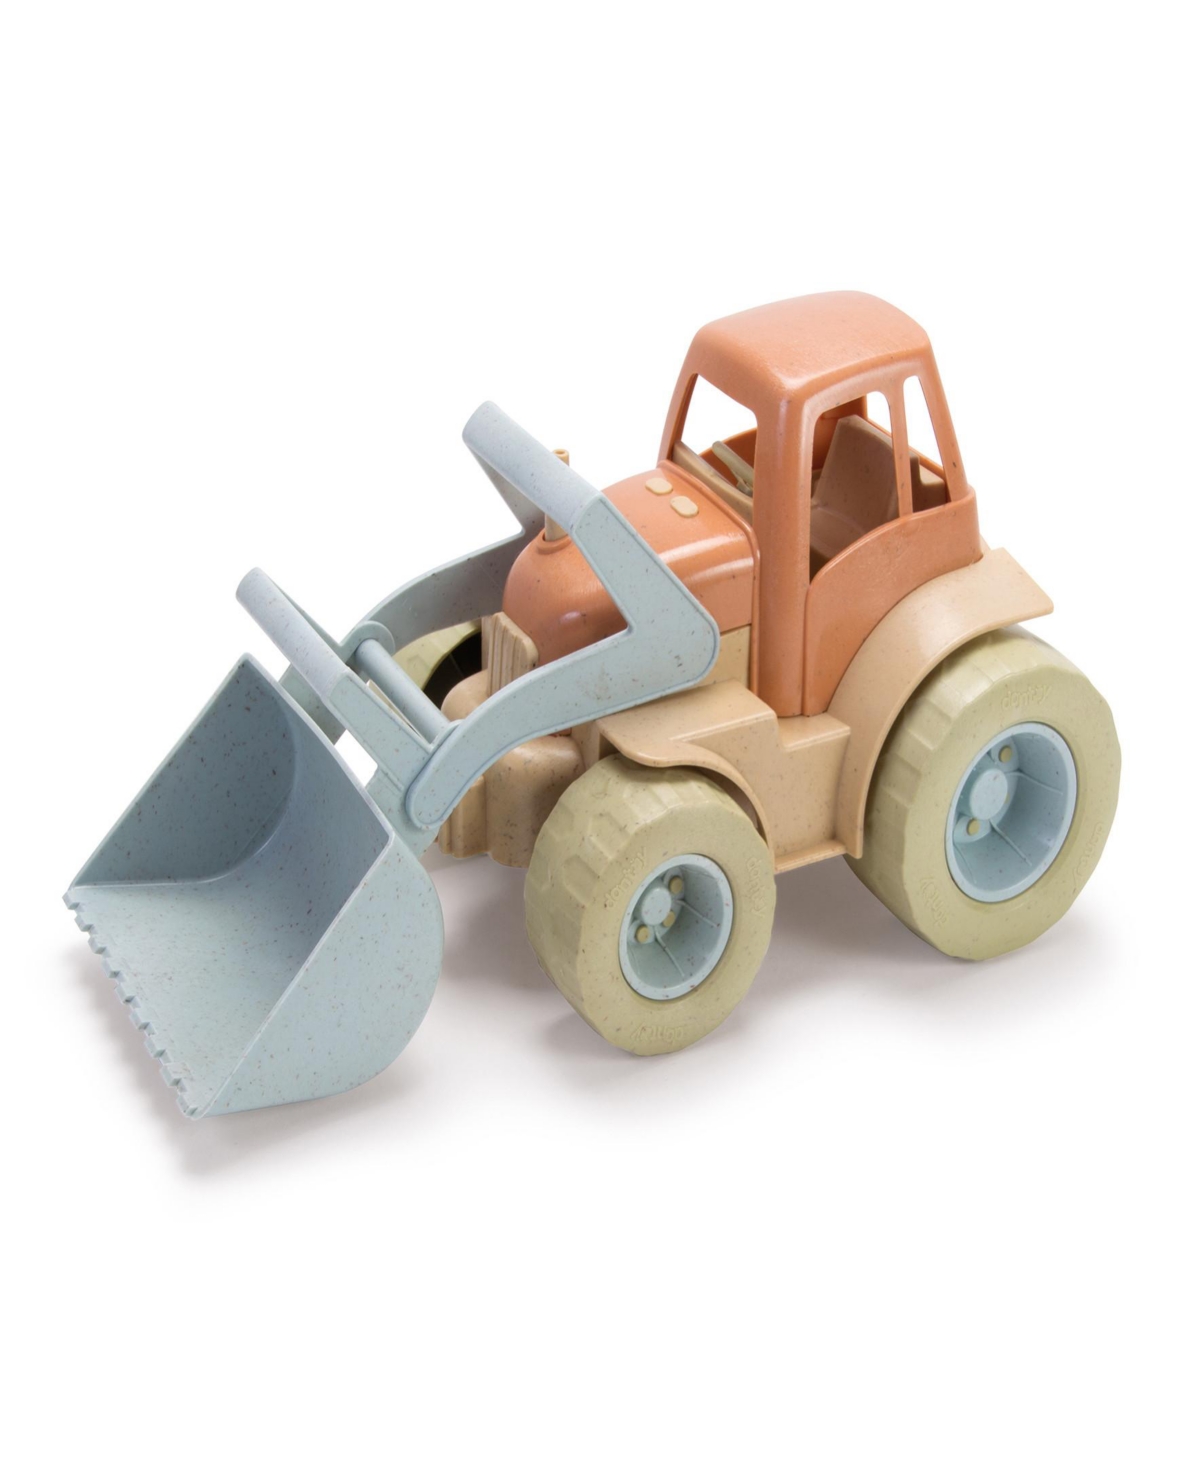 Dantoy Babies' Bio Big Tractor Toy Vehicle In Multi